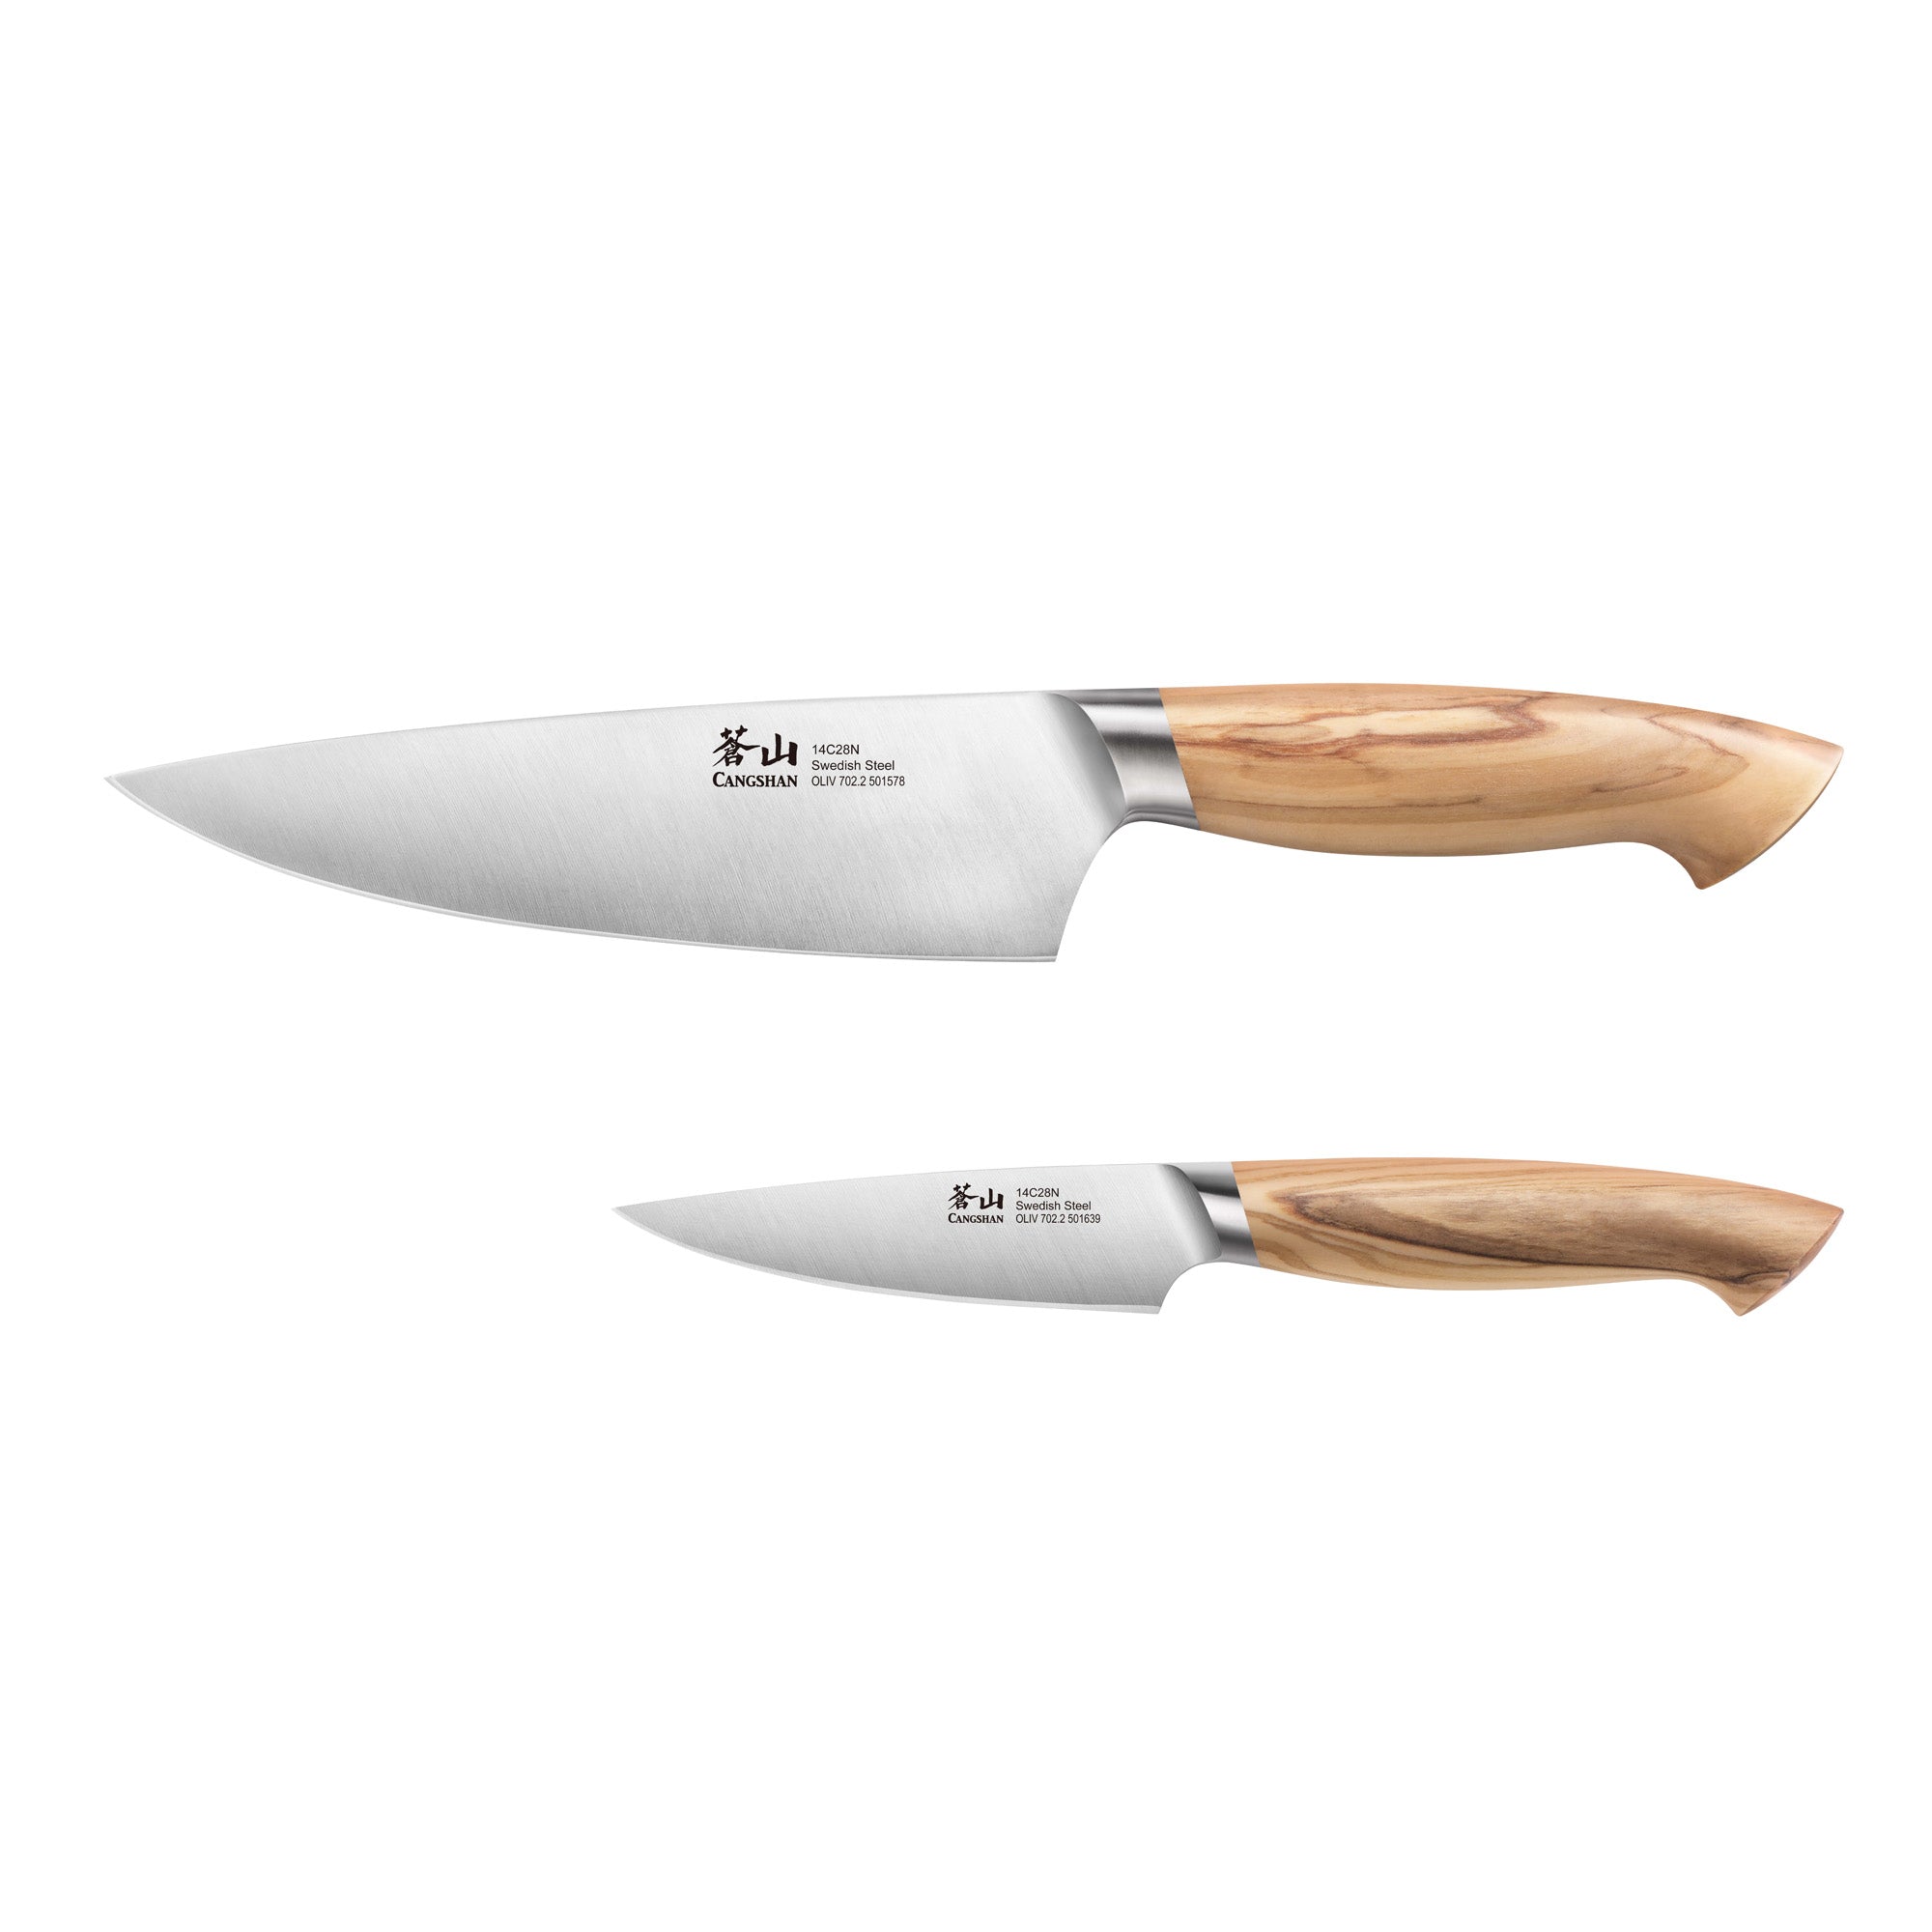 Cangshan Cutlery Oliv Series 15-Piece Knife Block Set